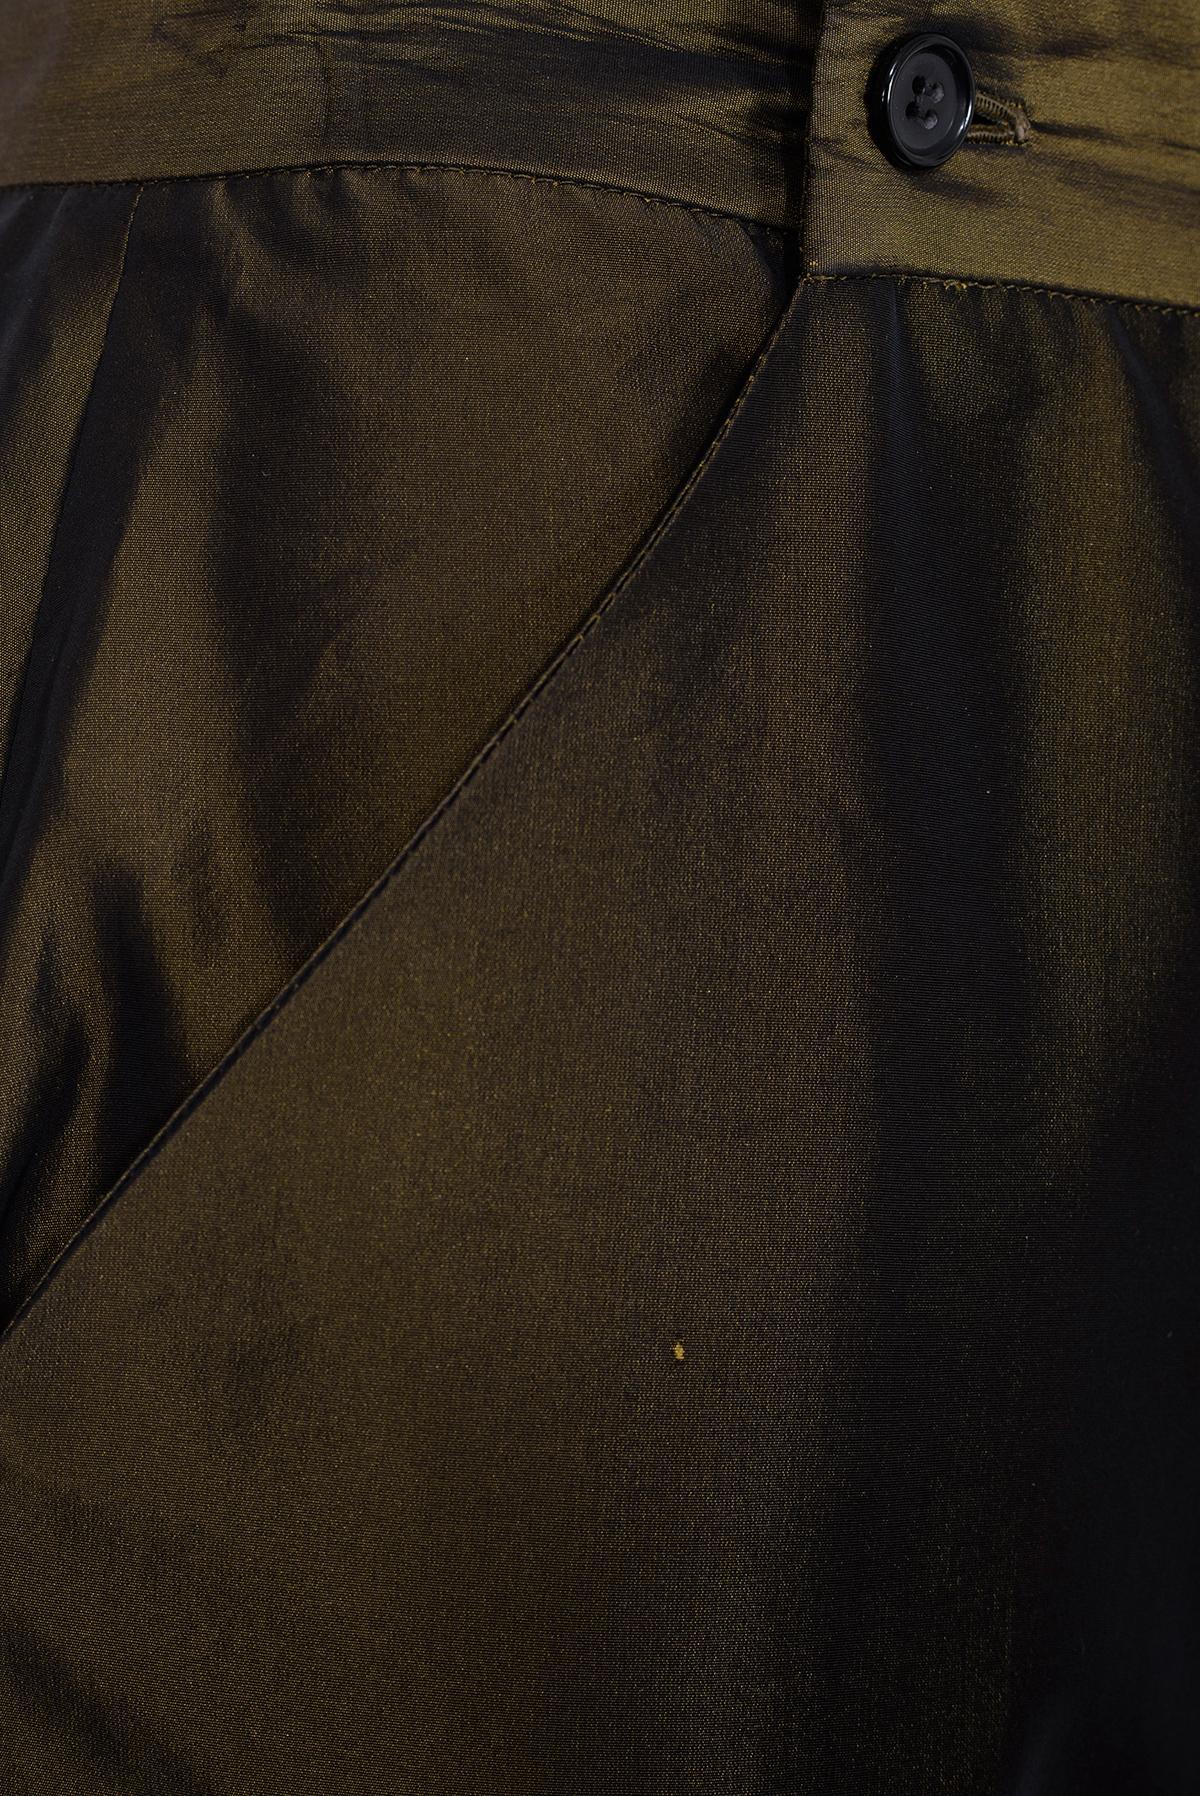 ALEXANDER MCQUEEN SS 97 Iridescent Taffeta Suit For Sale 9